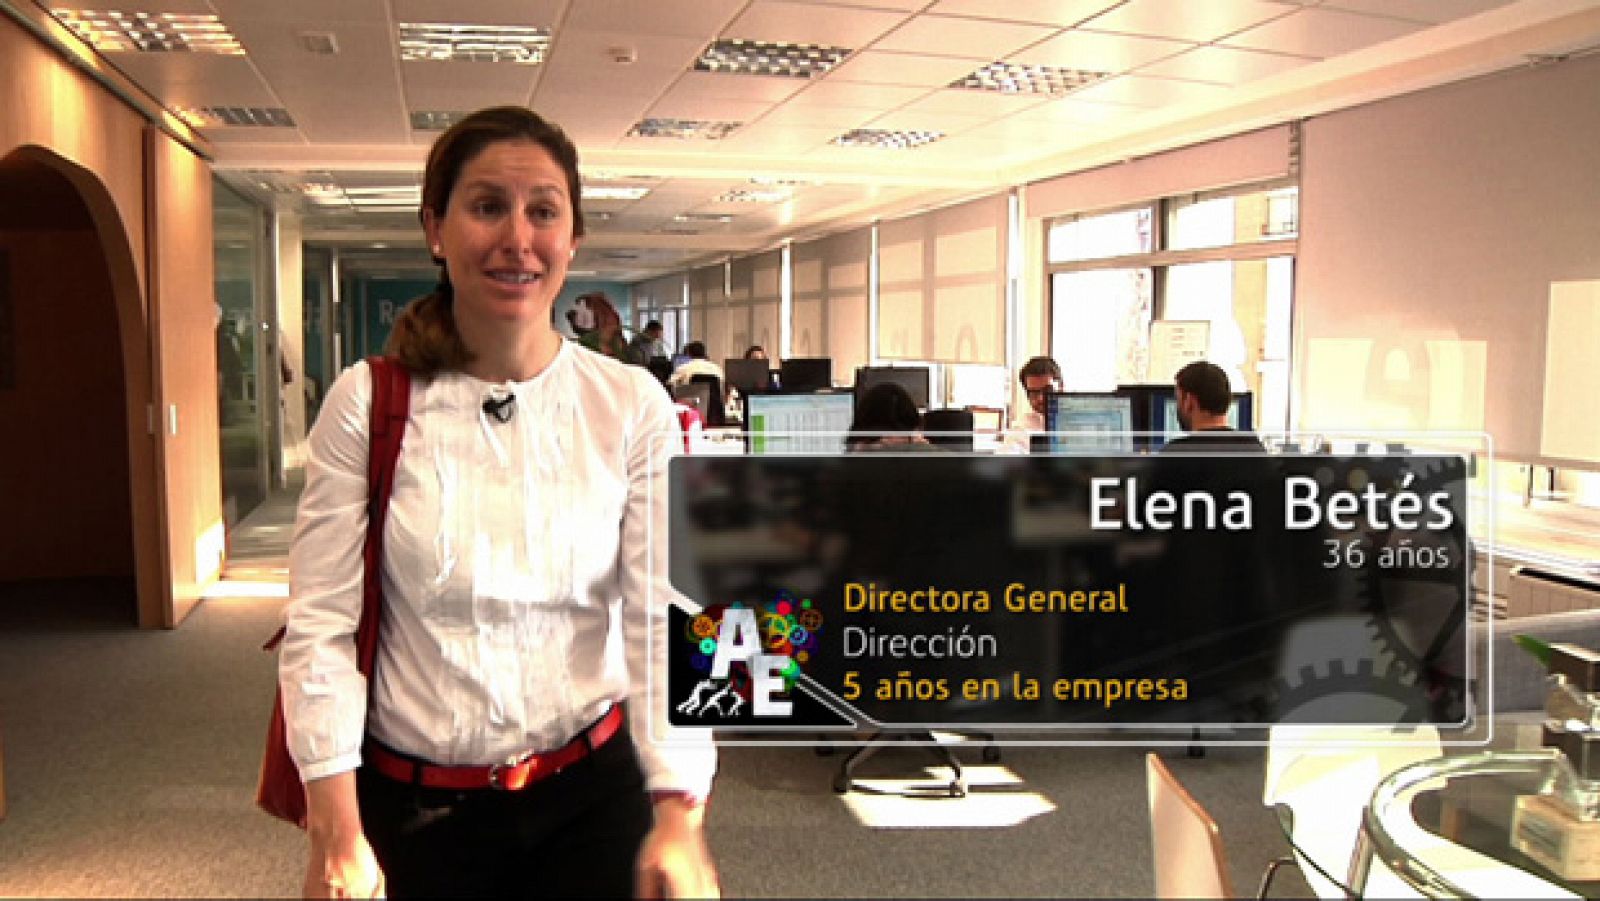 Elena Betés (36 años) Directora General